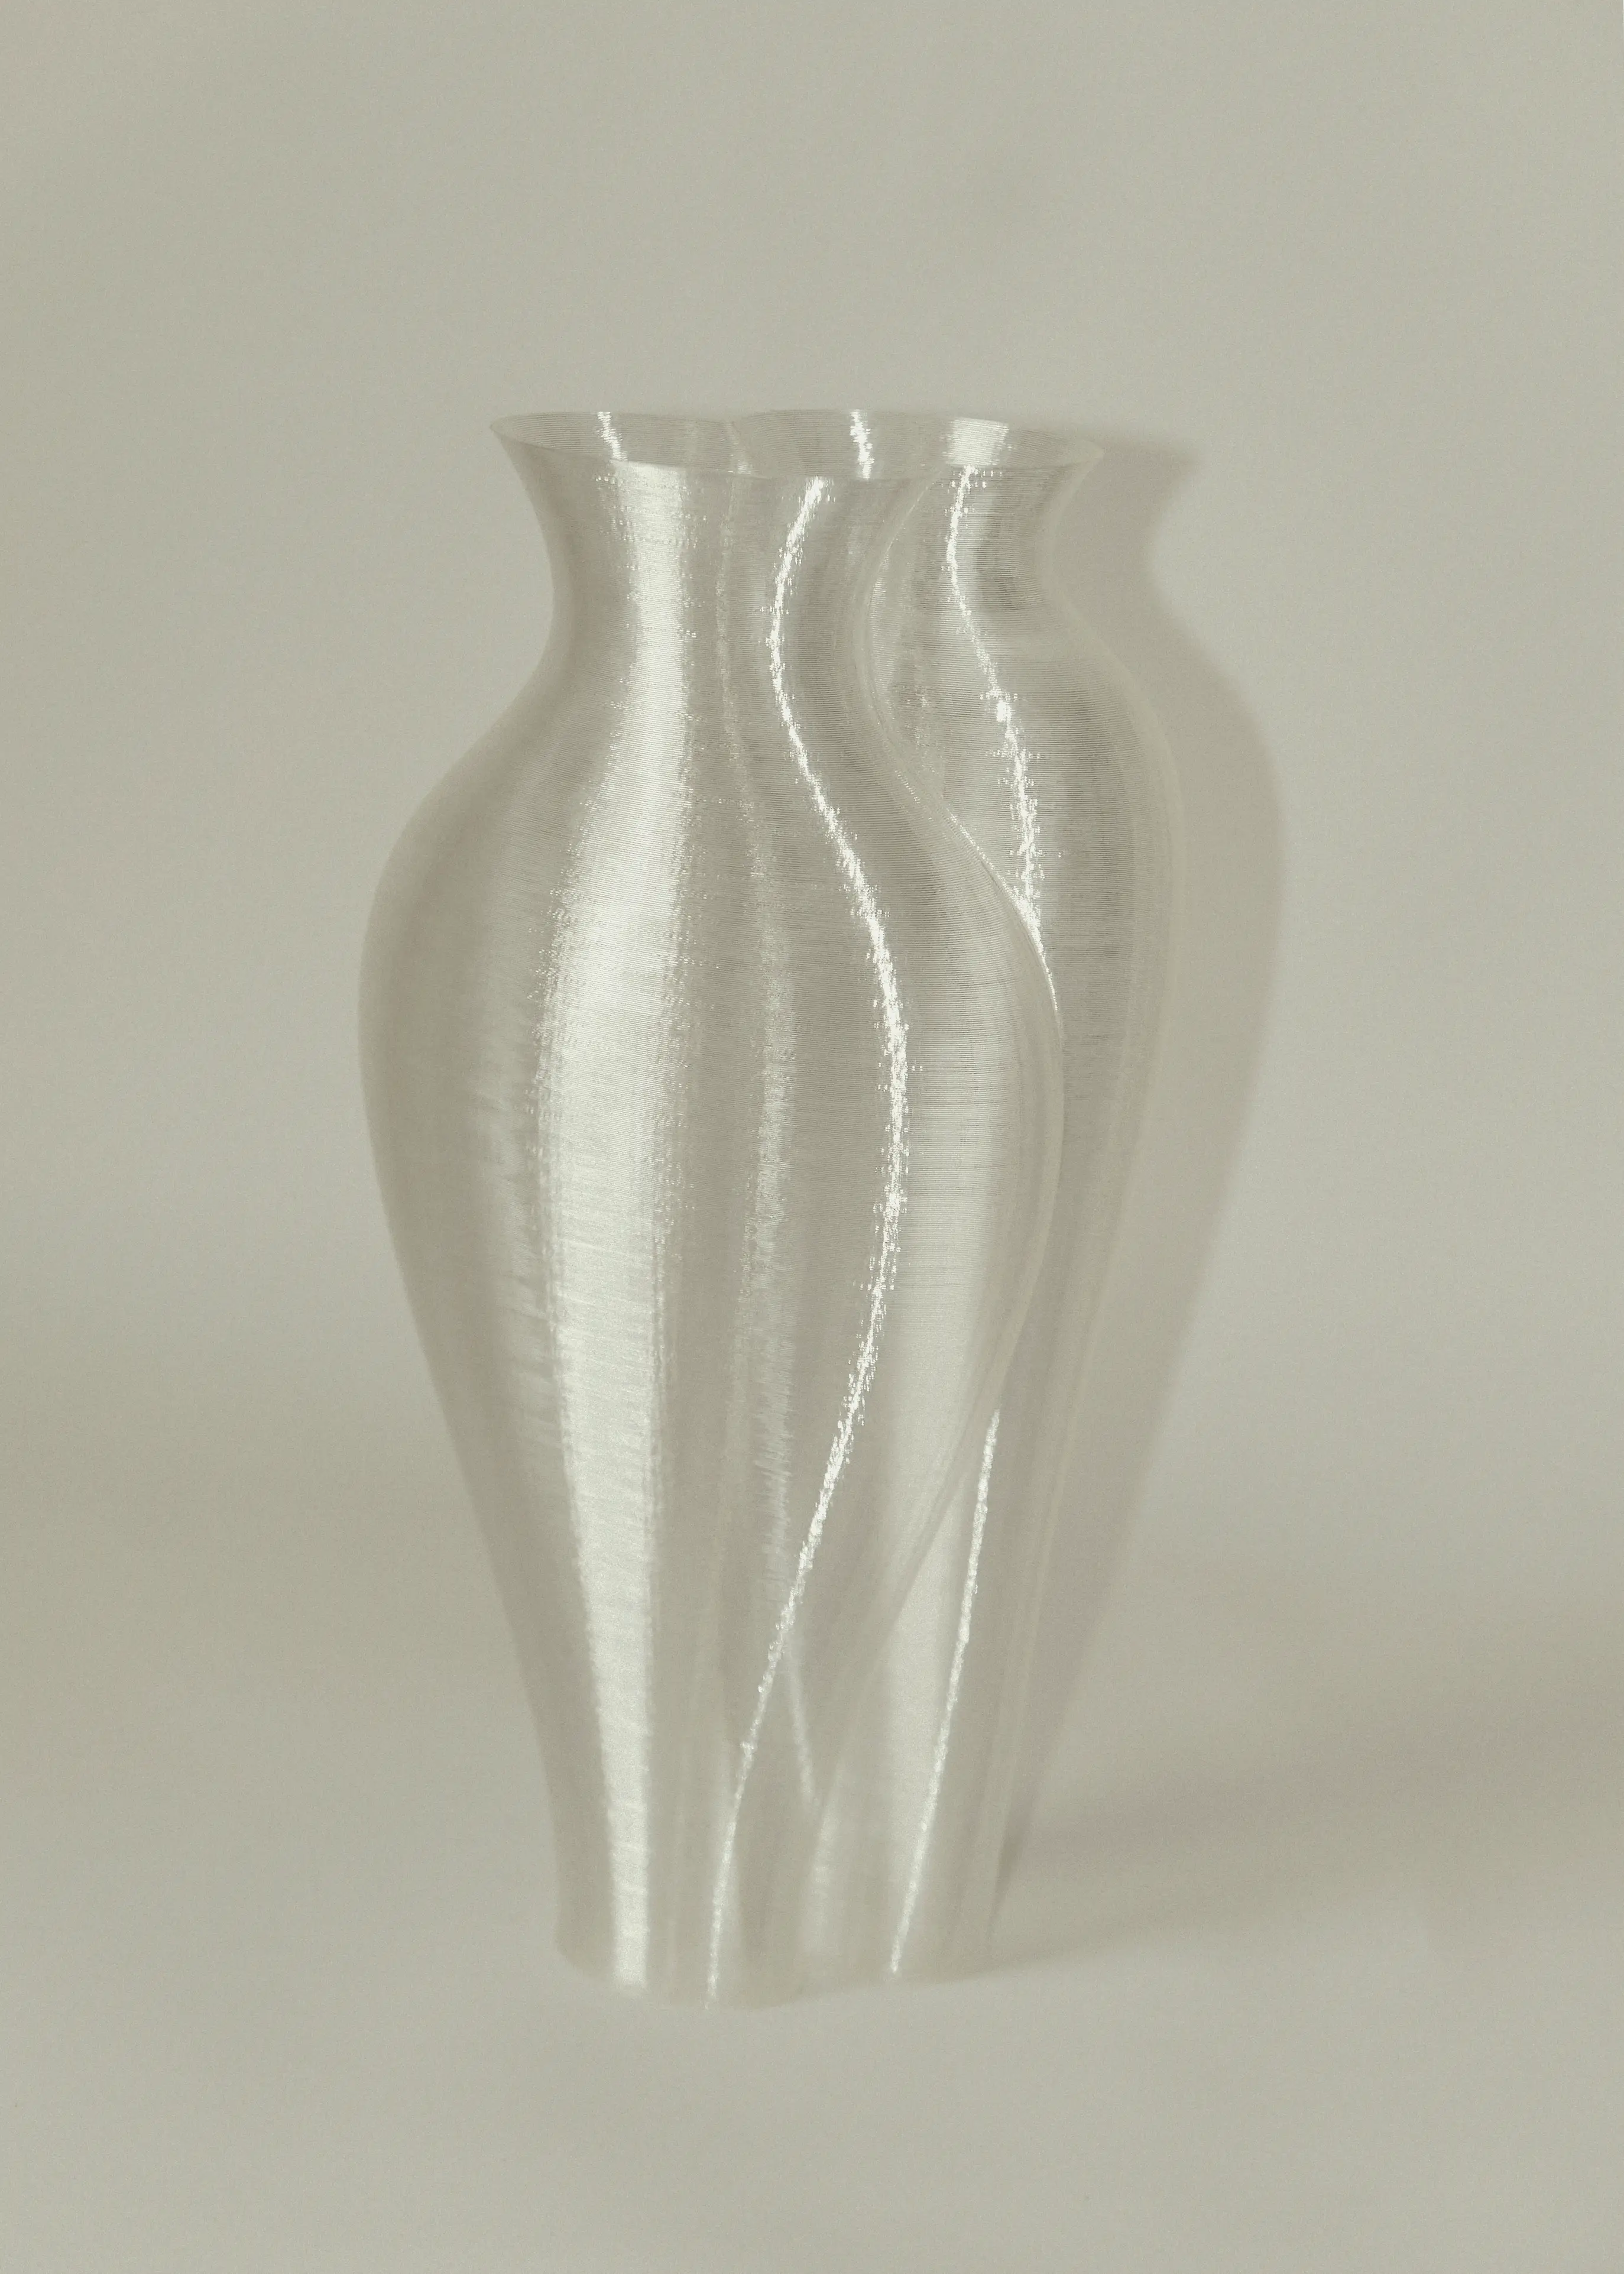 Argot Studio Soeurs Vase Transparent 4